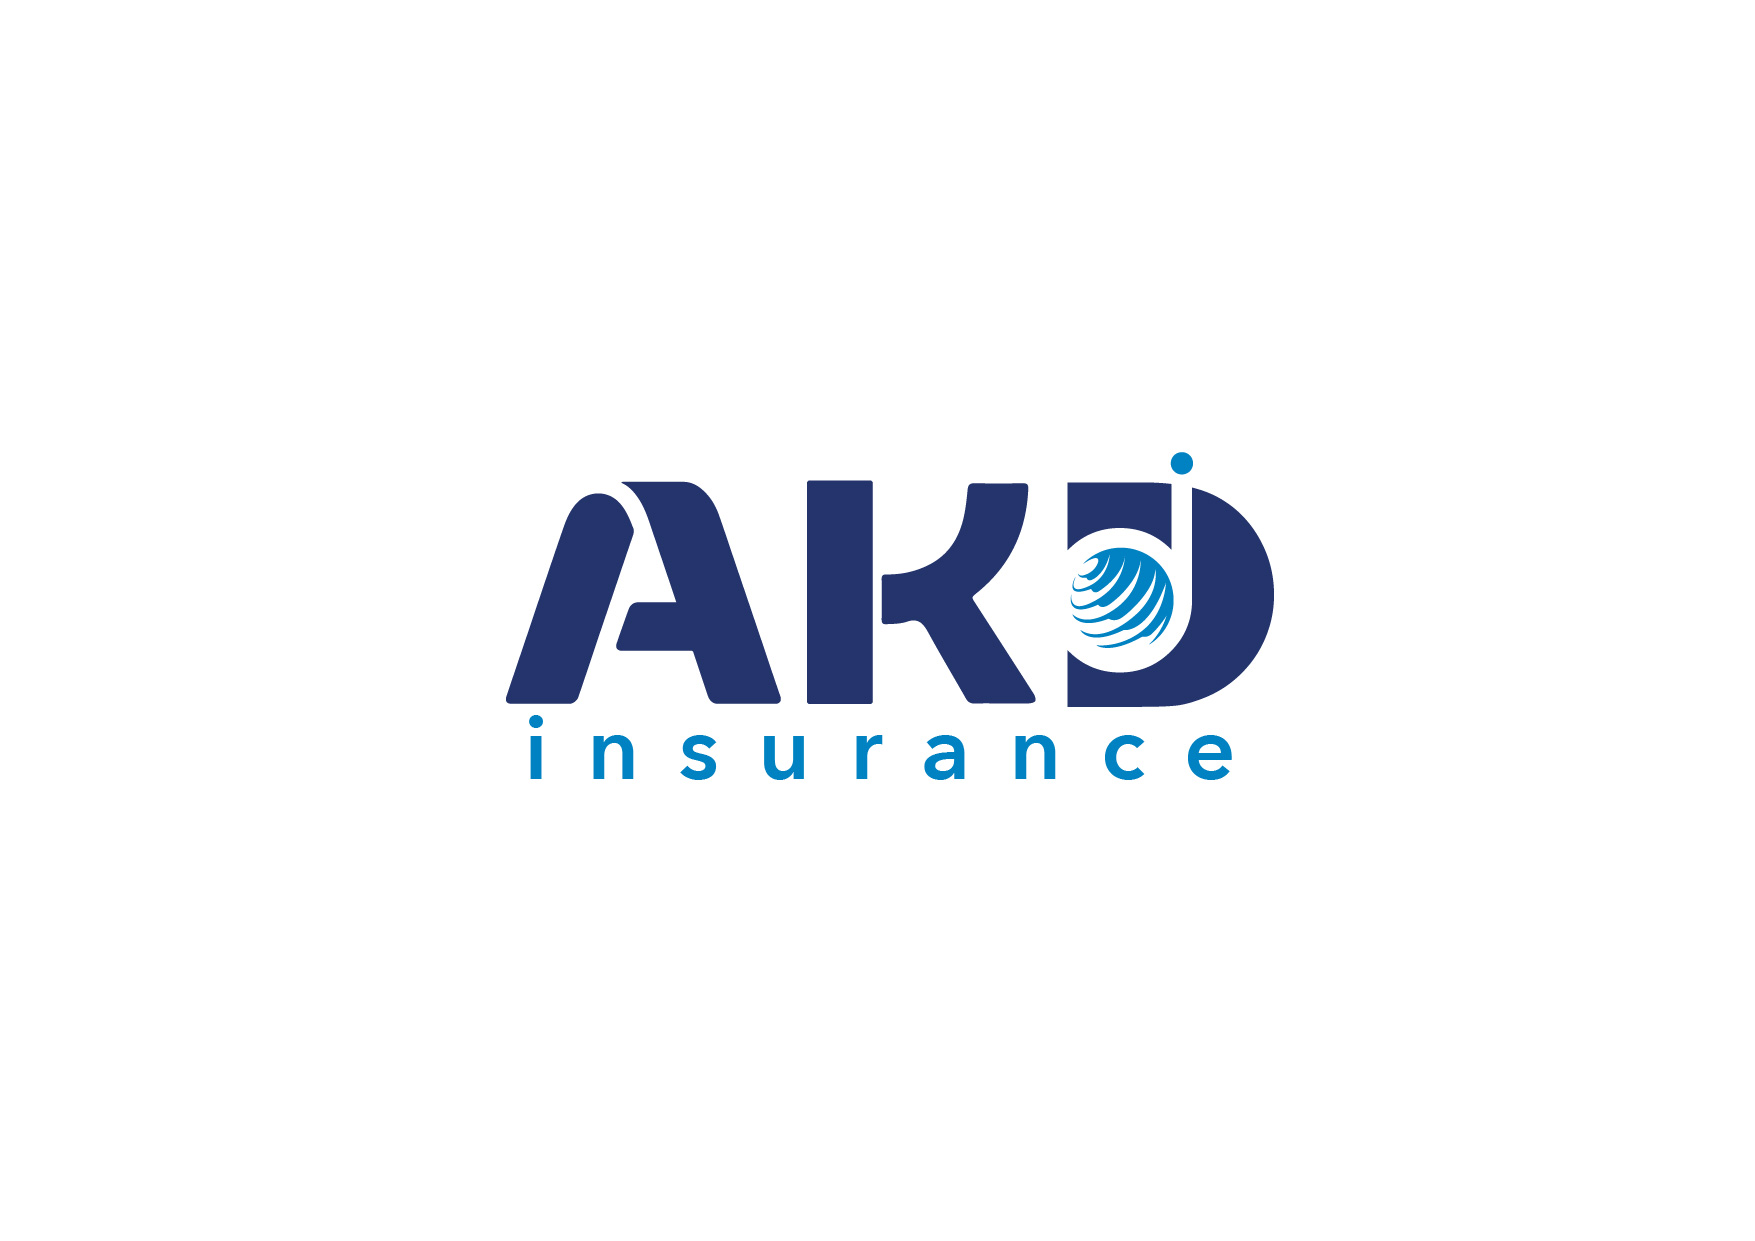 AKD Insurance Ltd